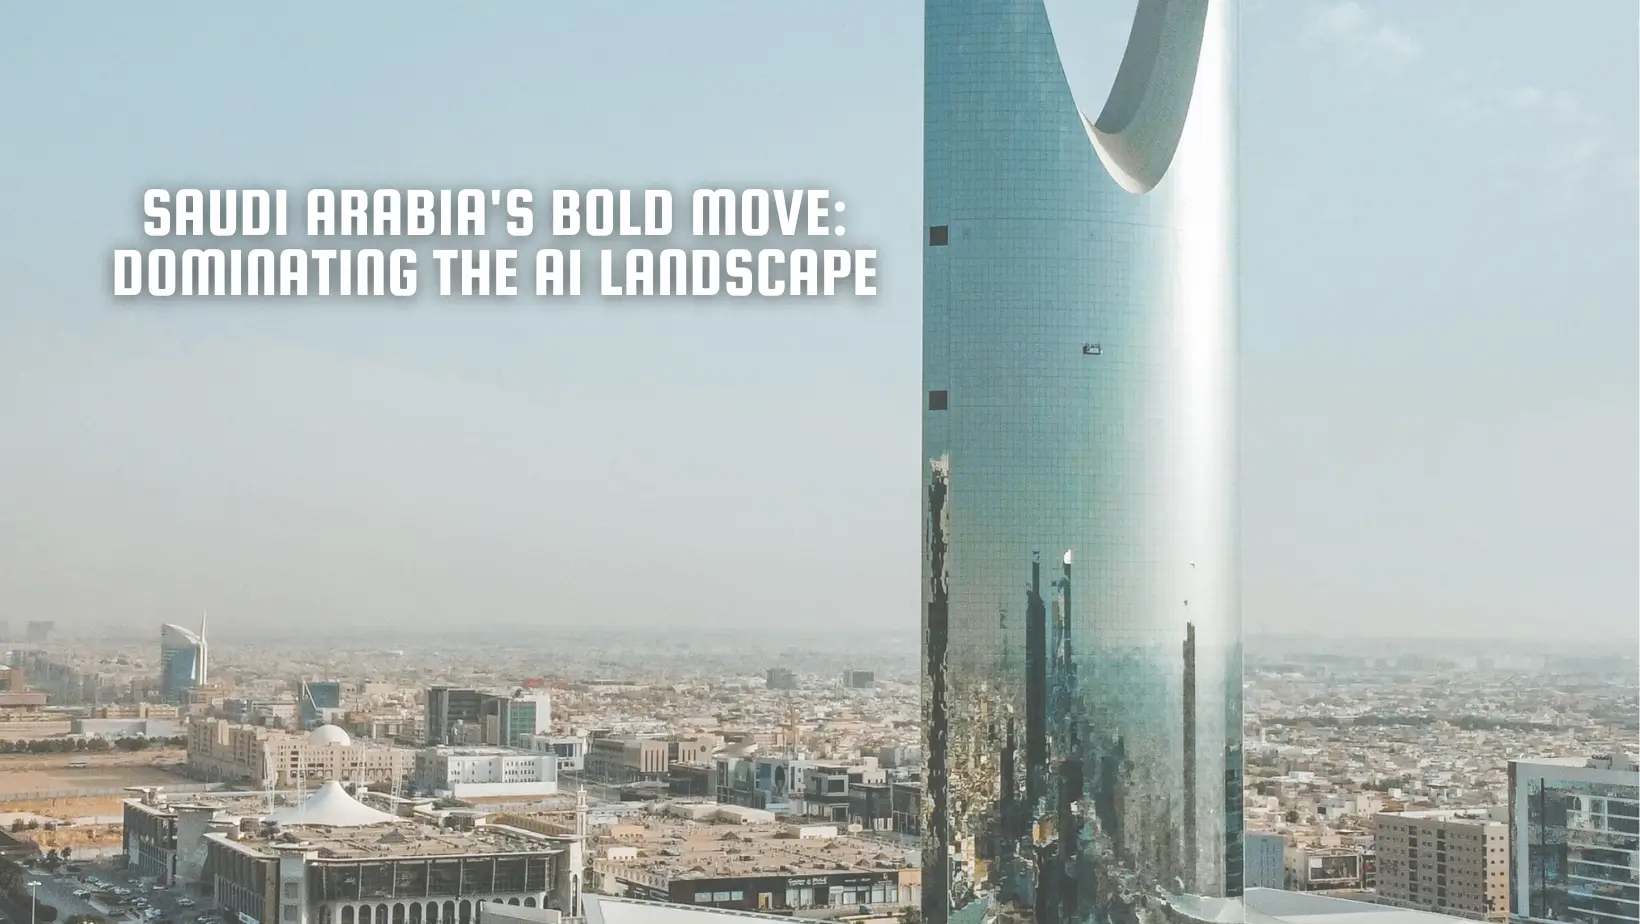 Saudi Arabia's Bold Move: Dominating the AI Landscape